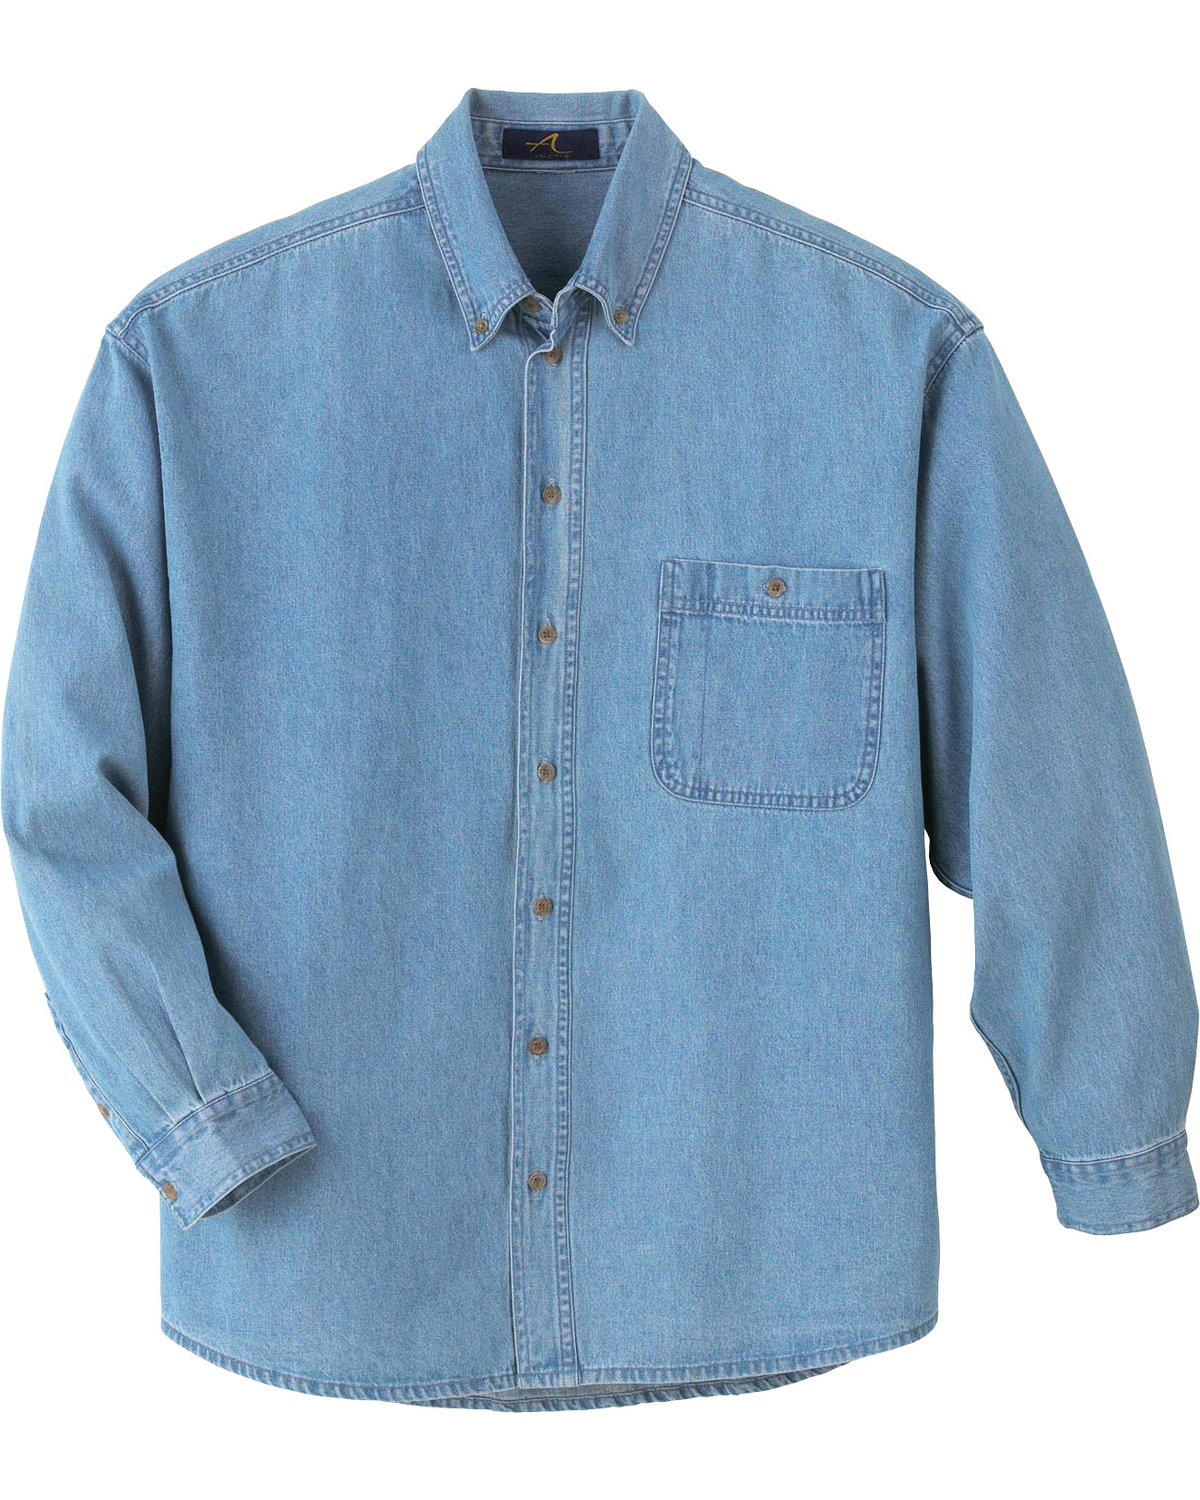 Ash City 88035 - Men's Denim Button-Down Long Sleeve Shirt